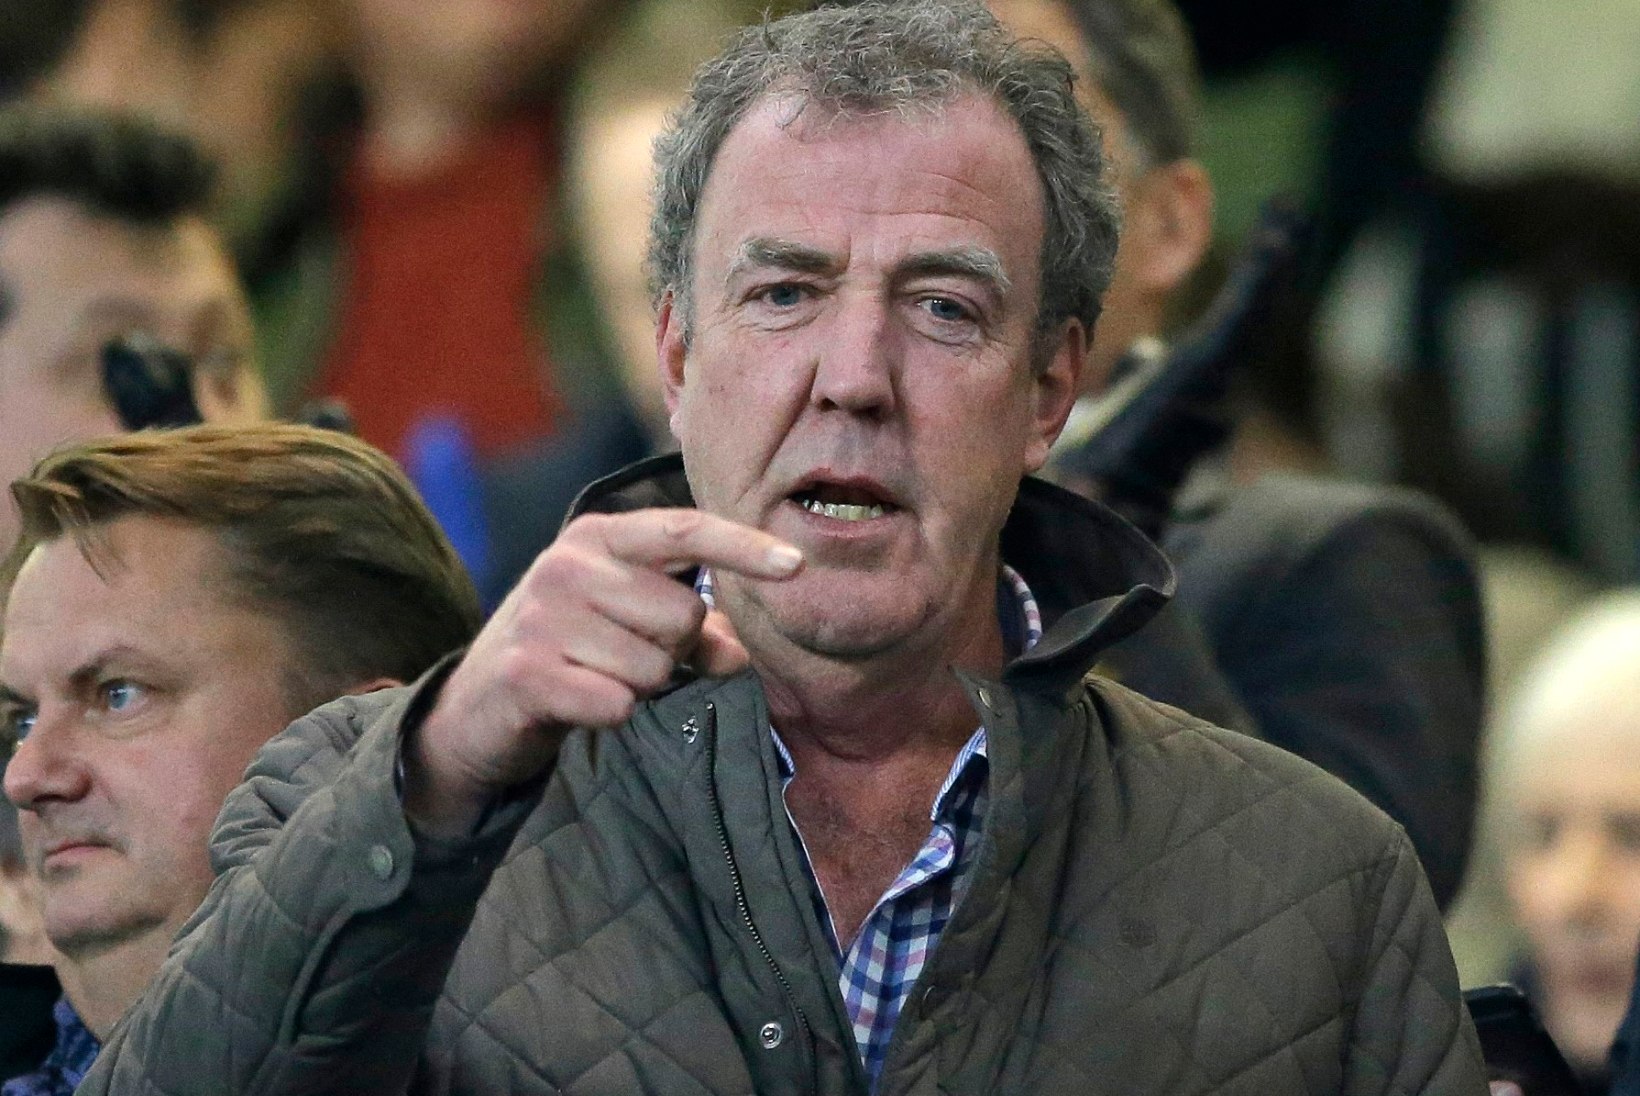 Jeremy Clarkson: olen ise süüdi, et mind "Top Gearist" vallandati